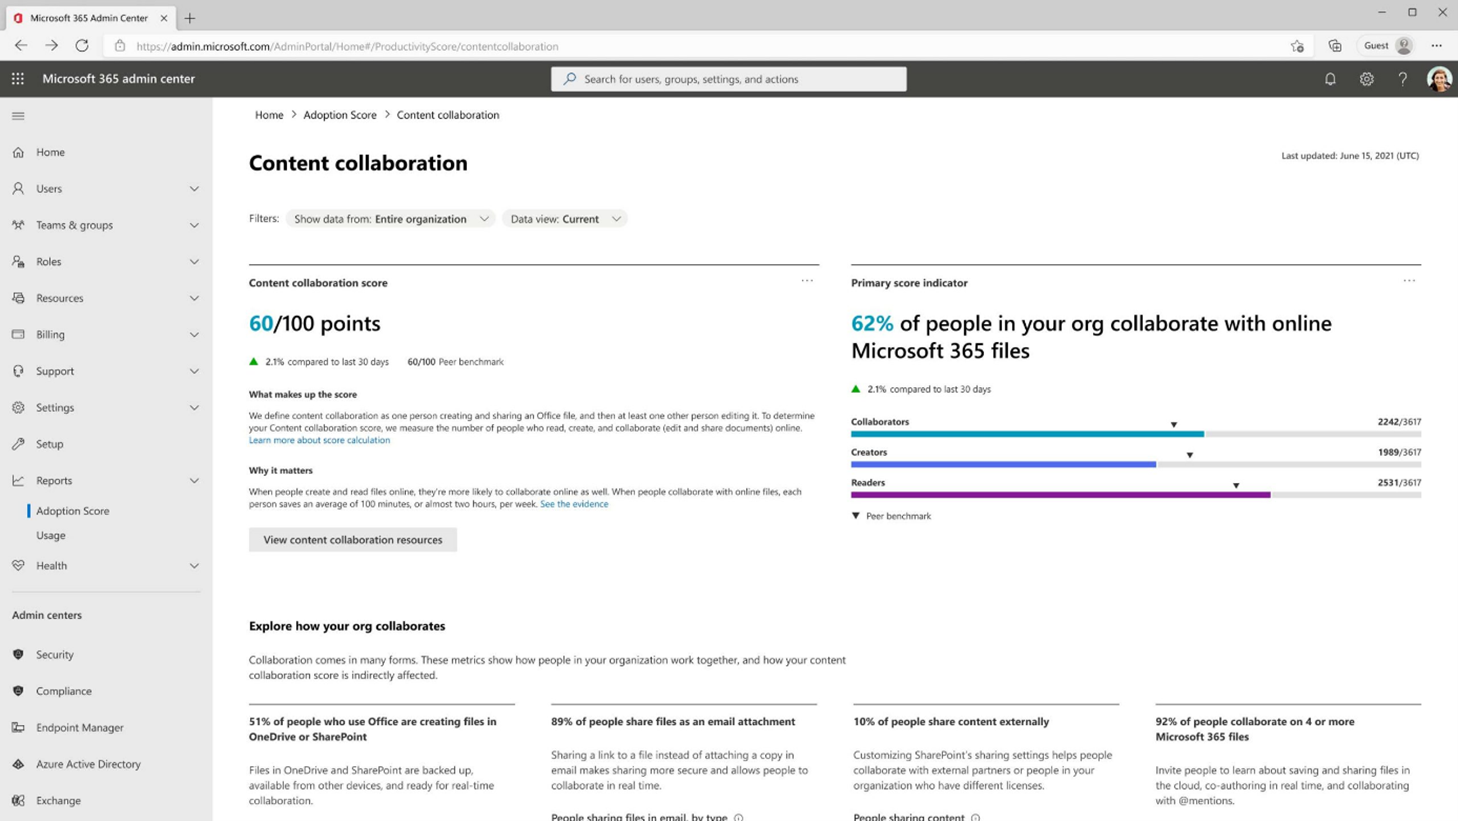 Screenshot showing people experiences in Microsoft Adoption Score.